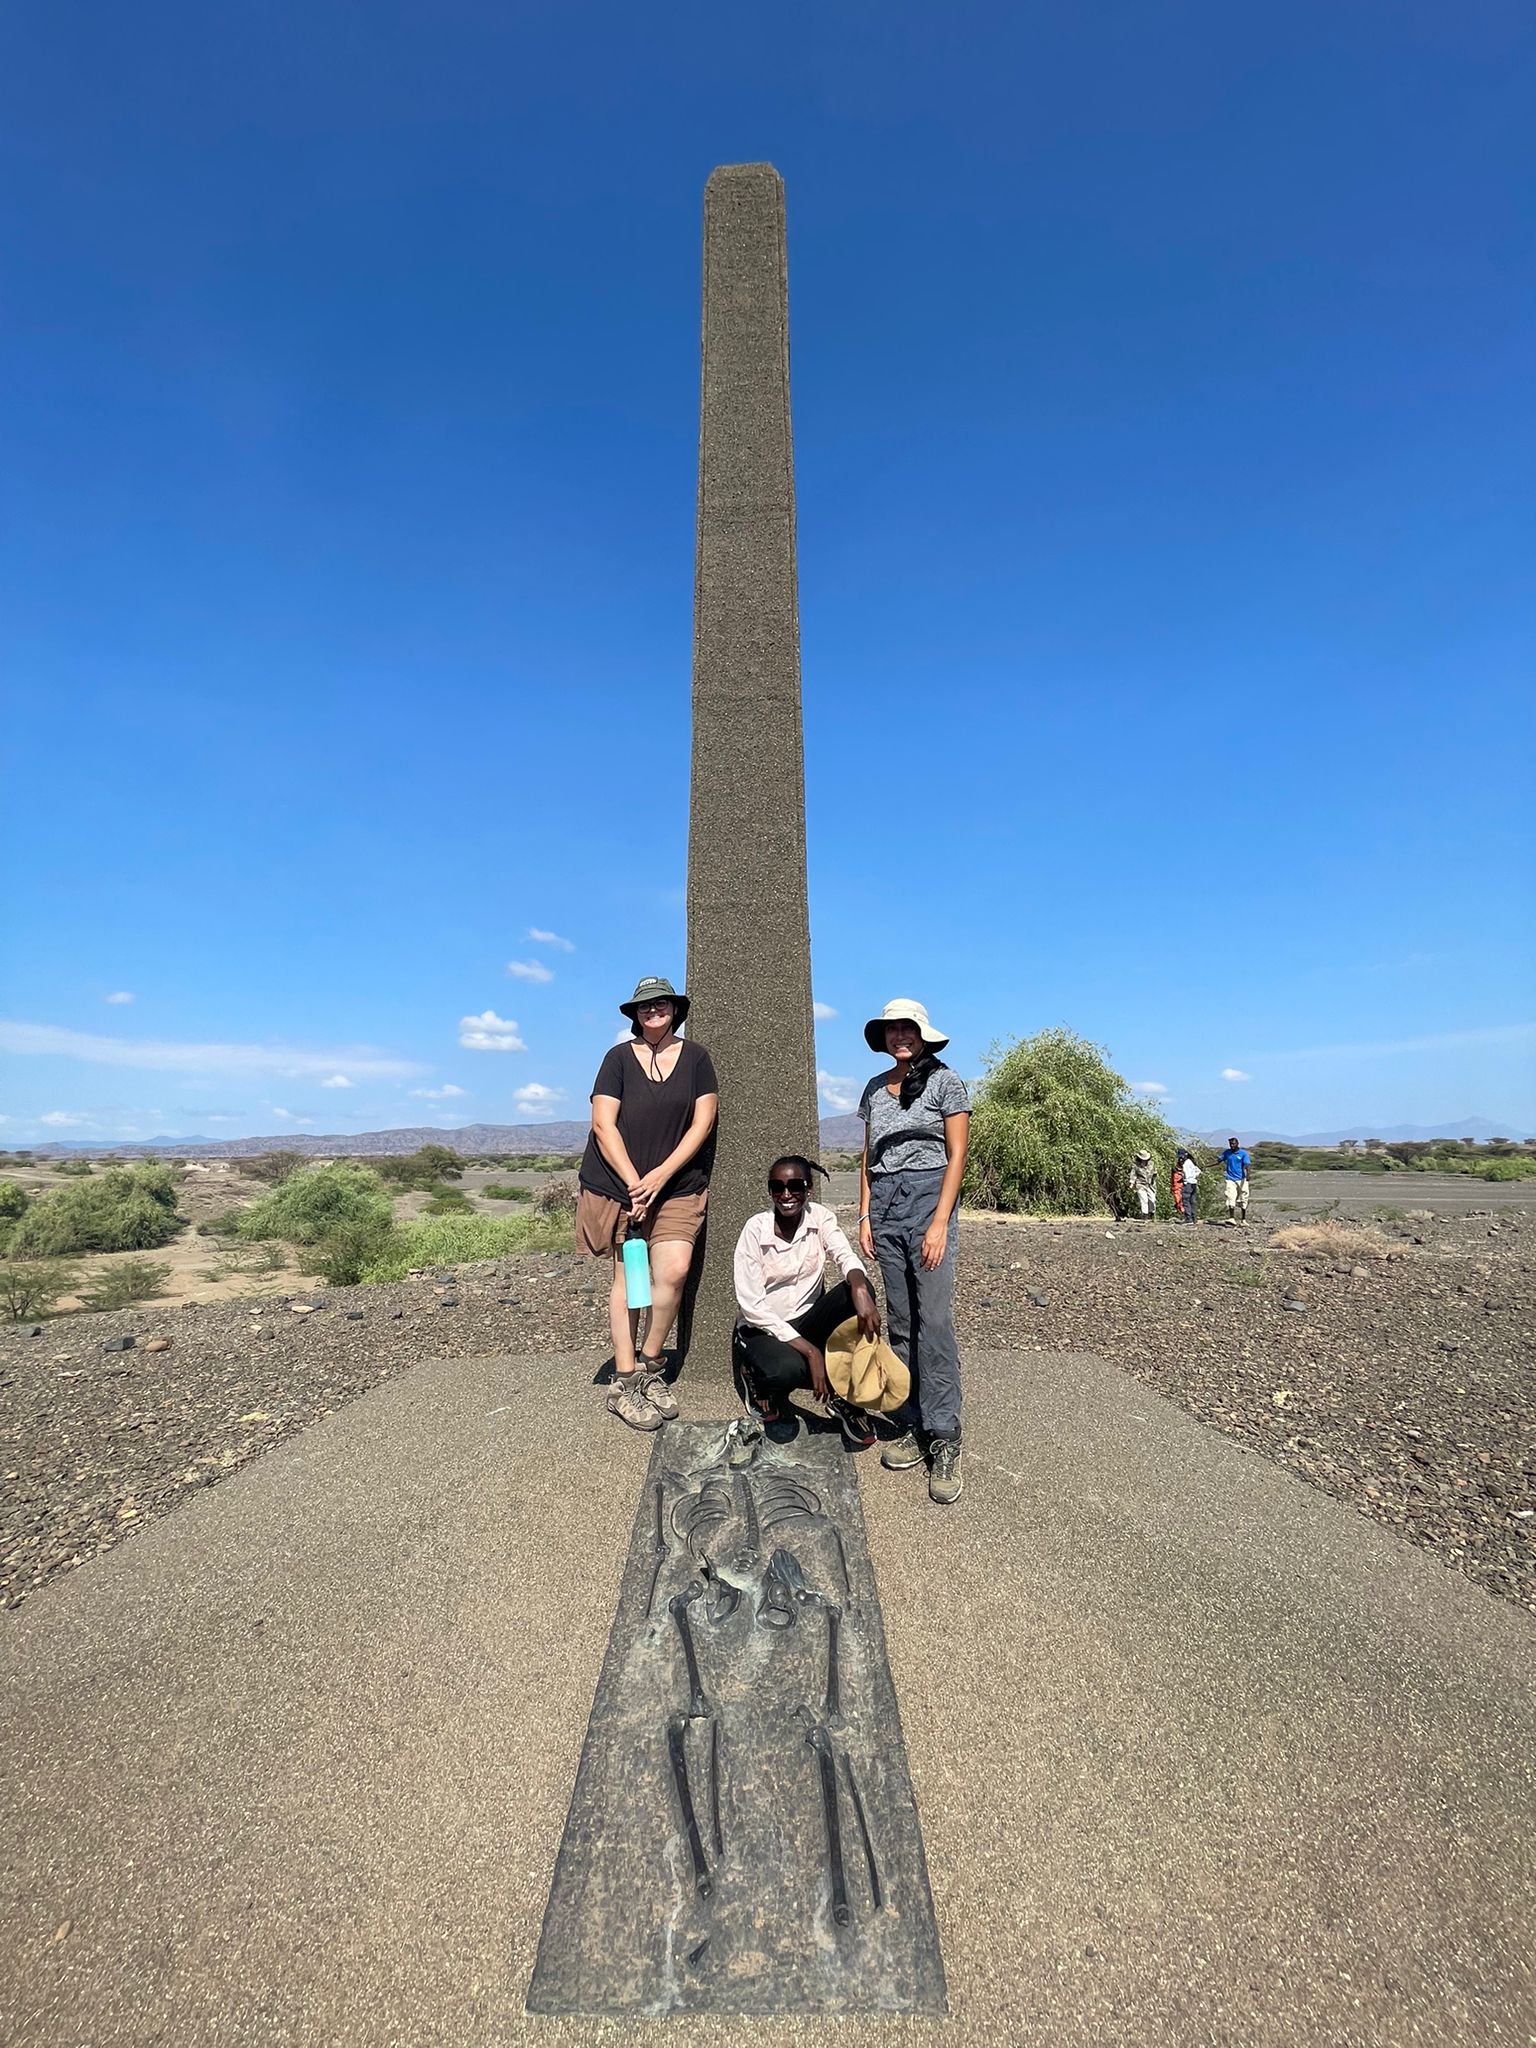 Studying prehistoric archaeology in the Turkana Basin